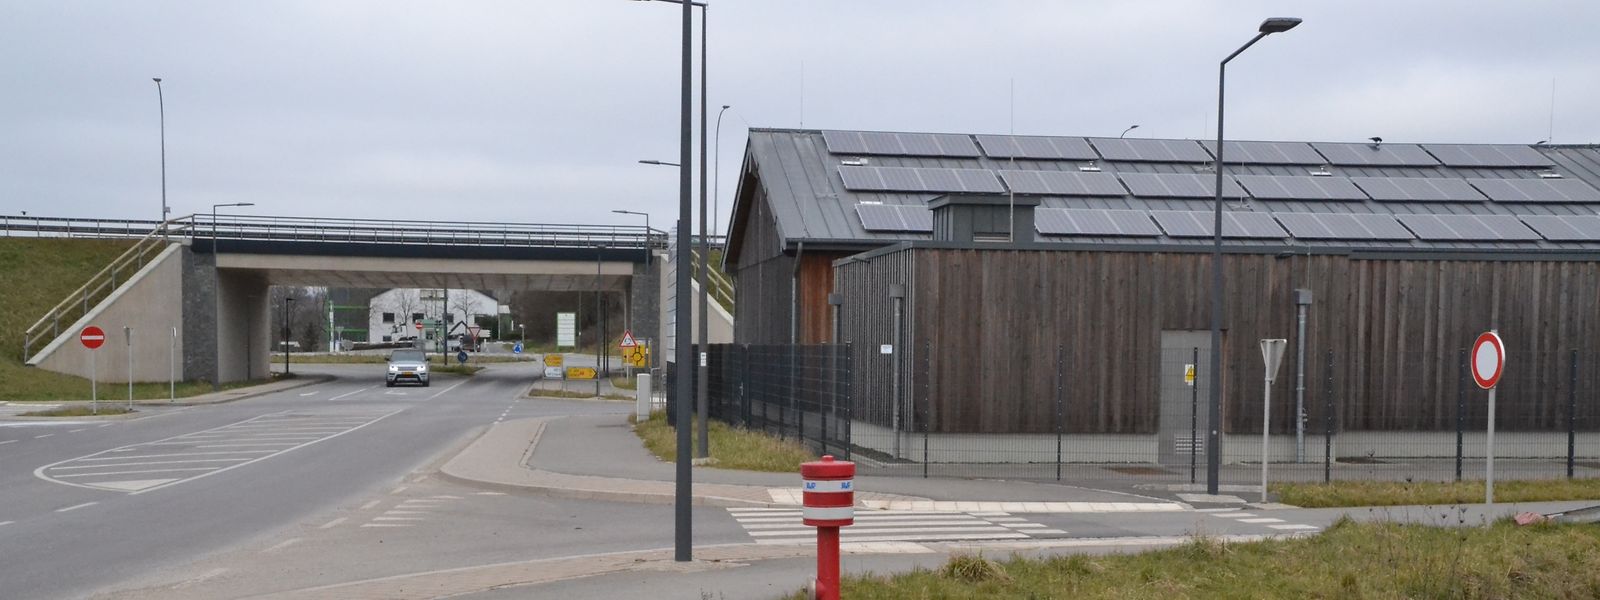 A boca de incêndio marca a futura entrada no CIS Nordstad. Ao fundo pode ver-se a ponte B7 na zona industrial de Fridhaff.